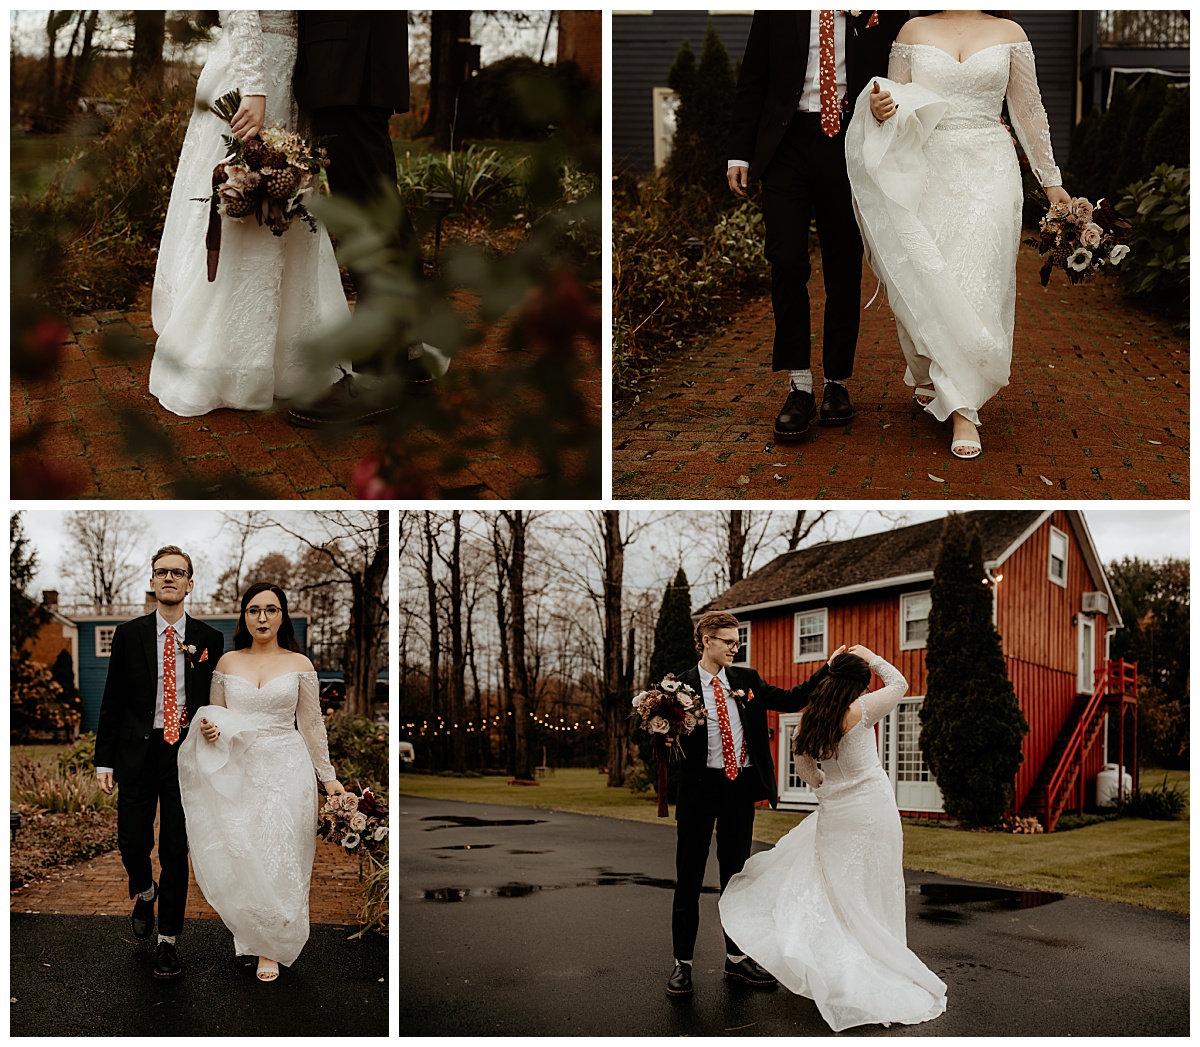 man twirls woman around outside barn by New York wedding photographer